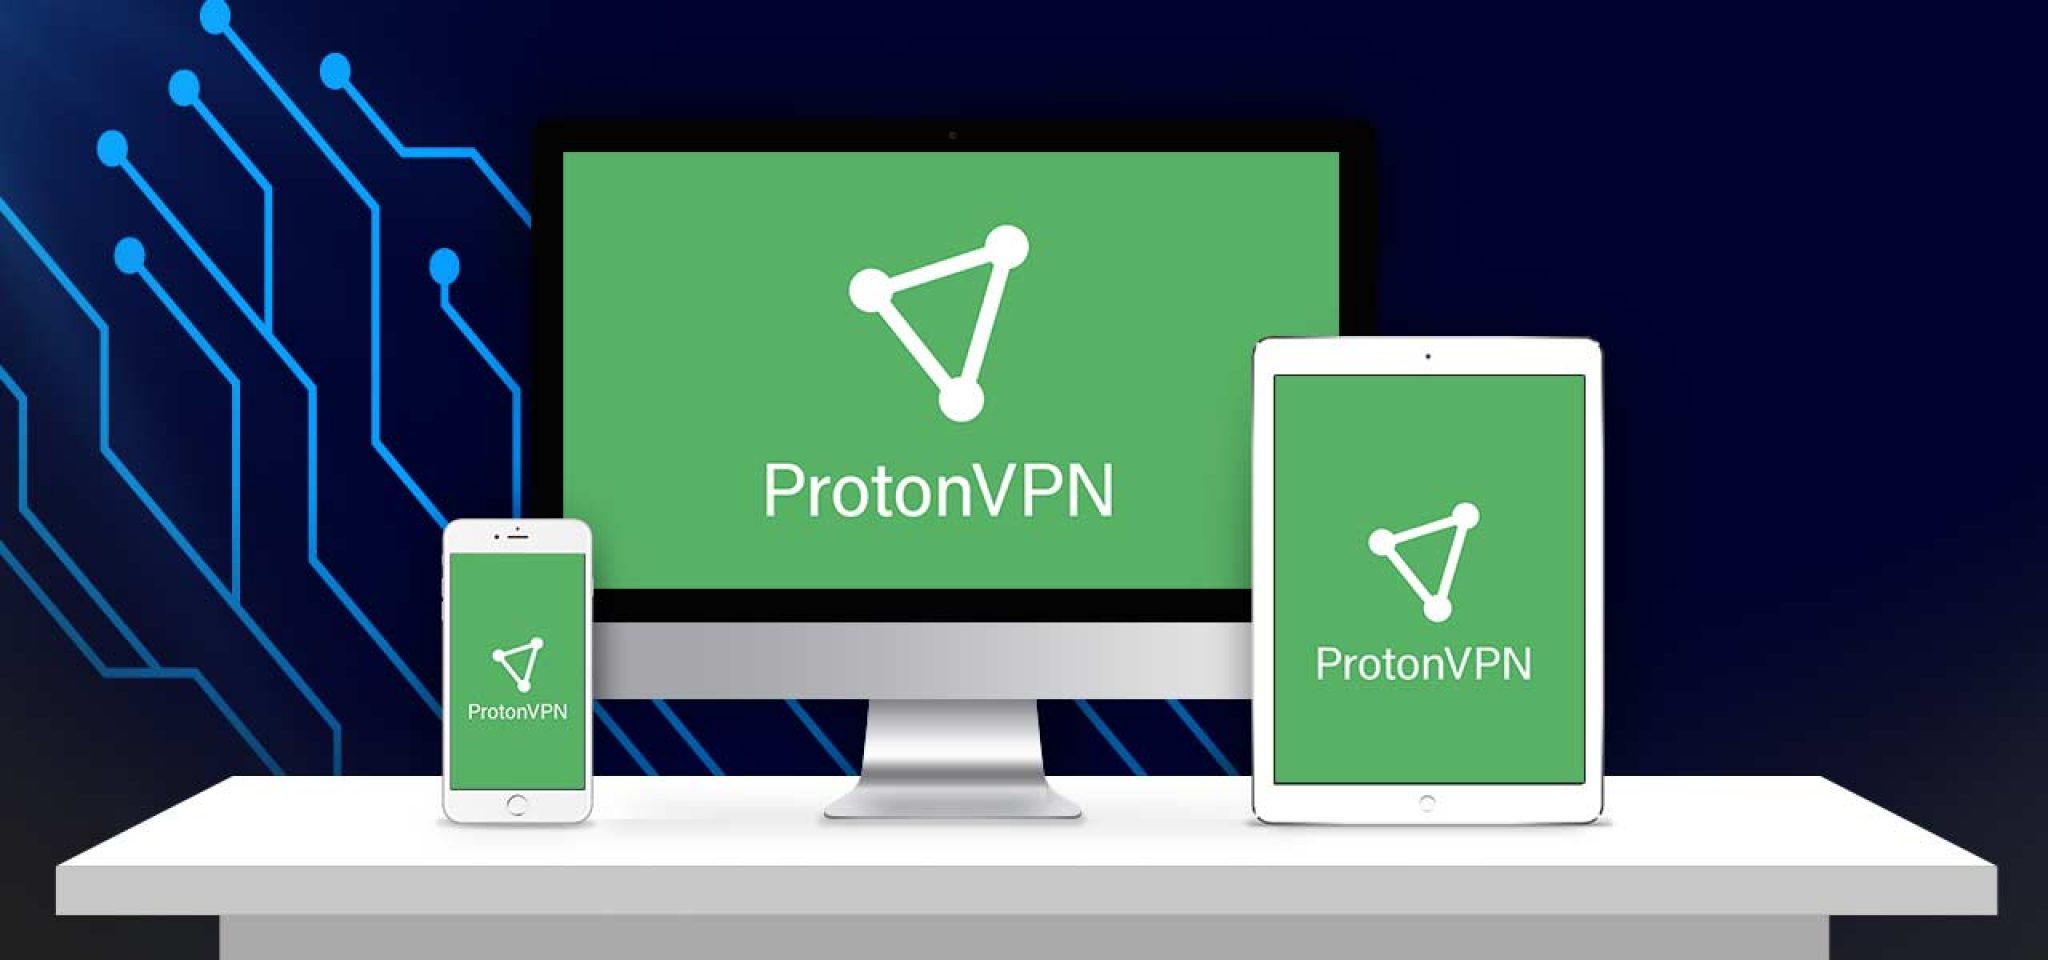 Https protonvpn. Протон впн. VPN-сервис Proton. Proton VPN логотип. Фотон впн.